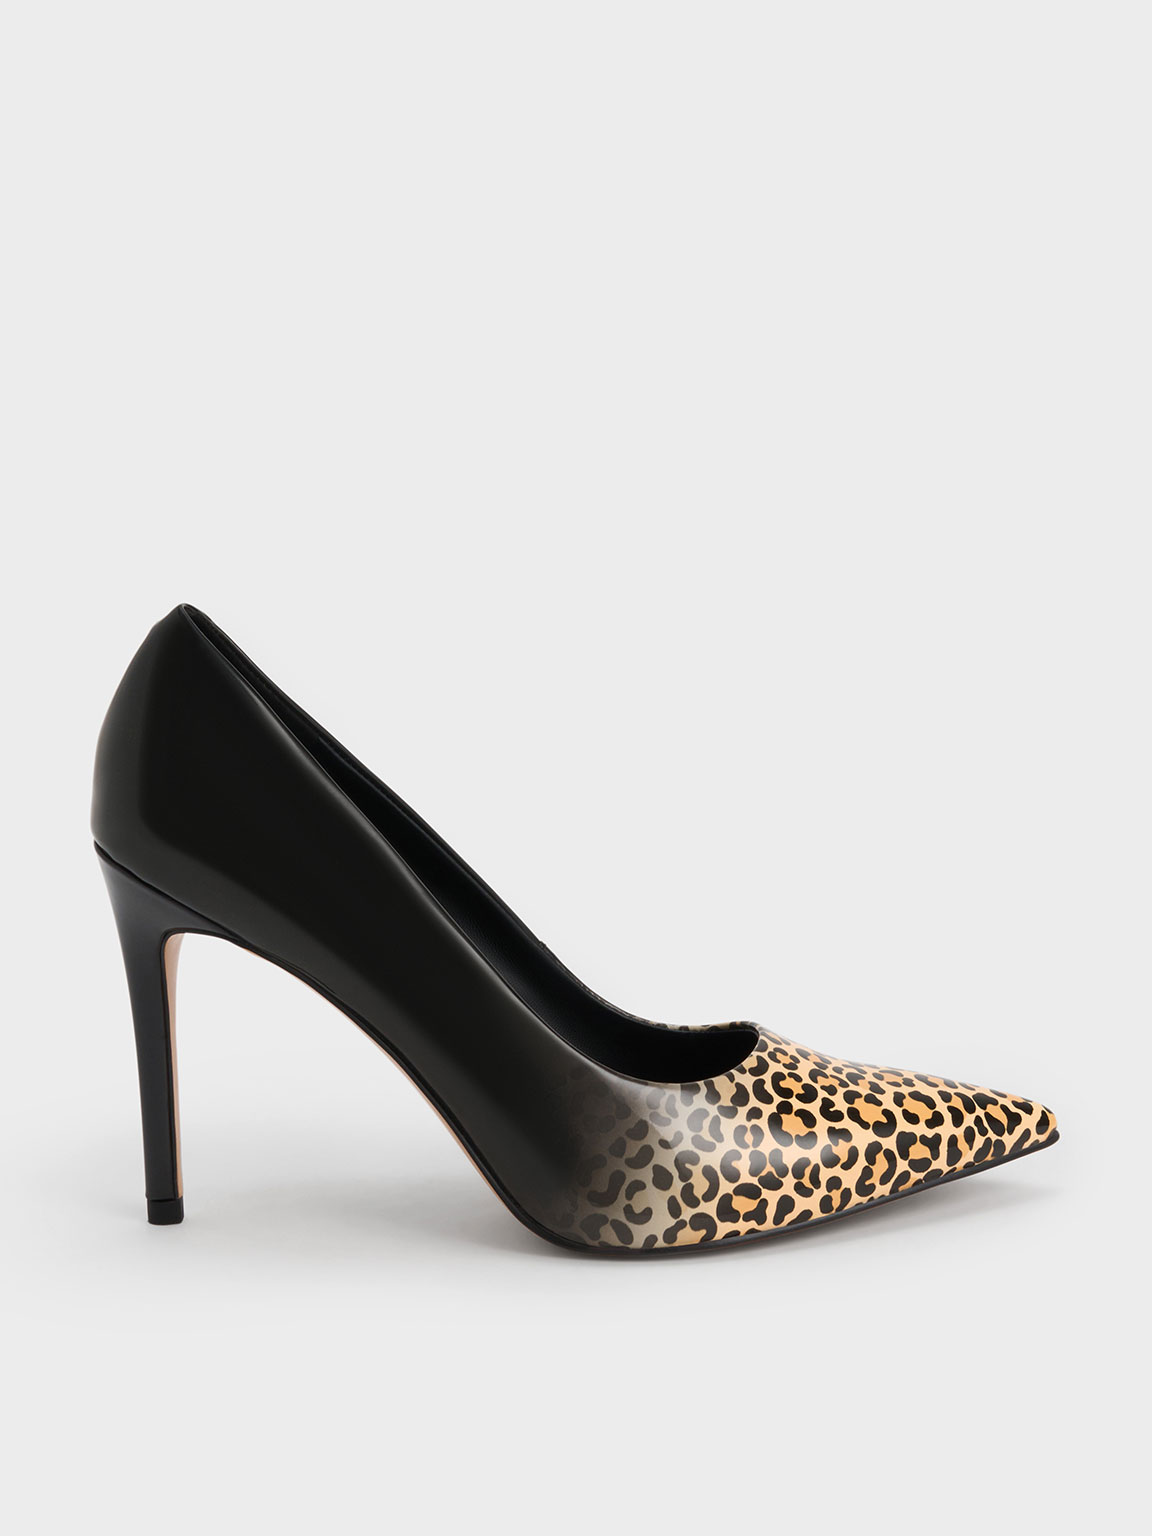 Women Heels Leopard Patent Leather Pumps Pointed Toe Stiletto